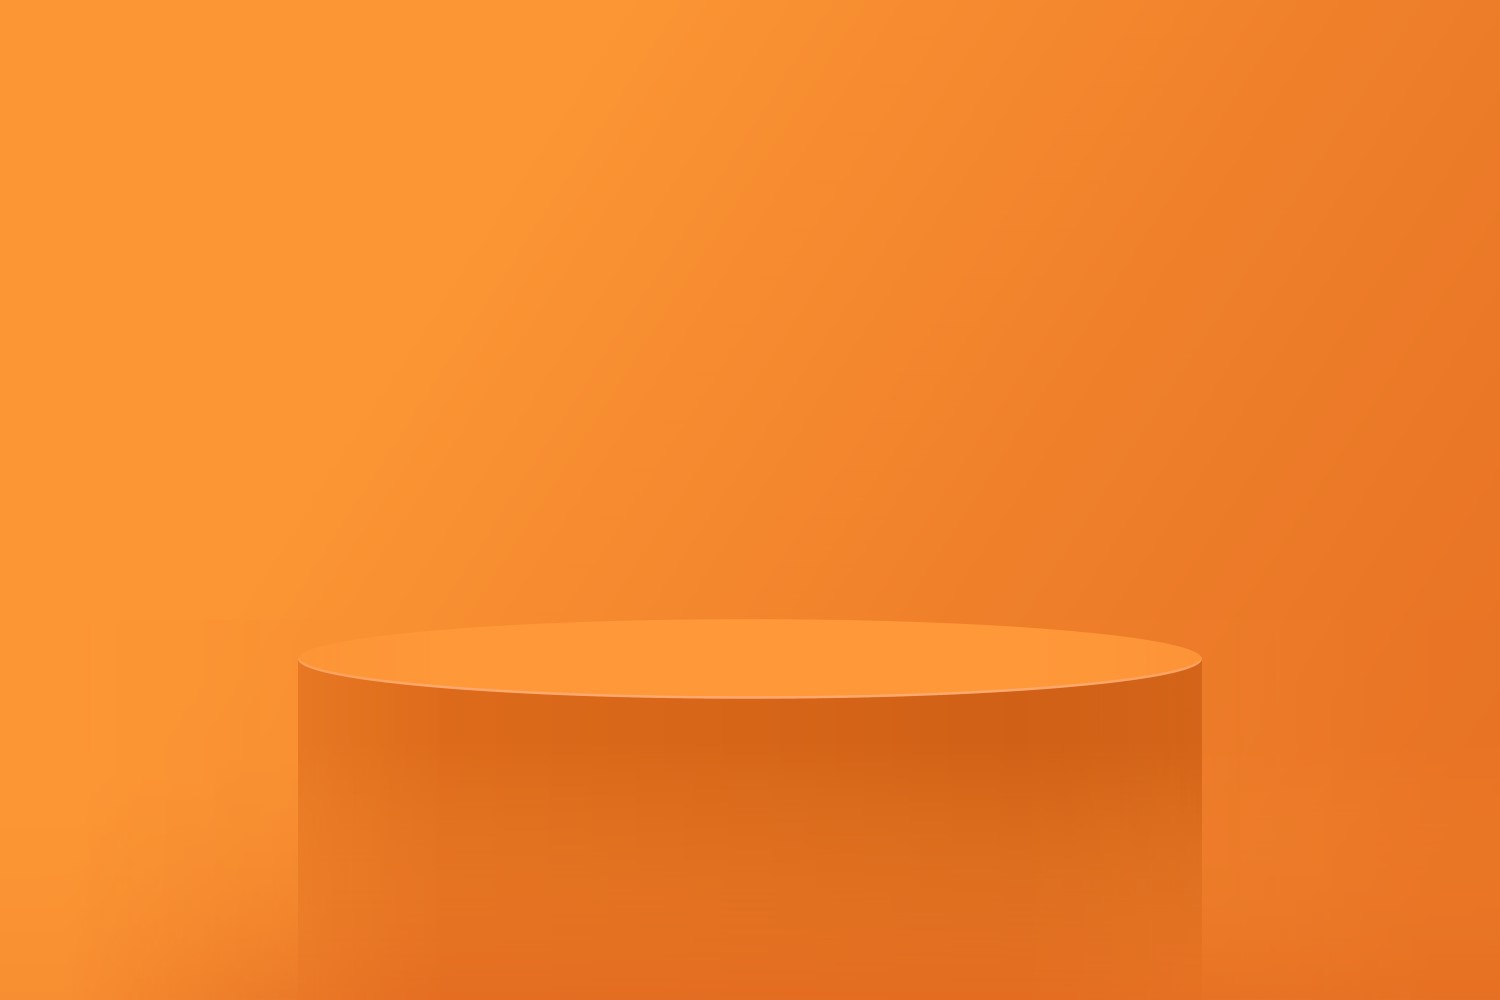 Circular podium stage and Orange background 3d rendering